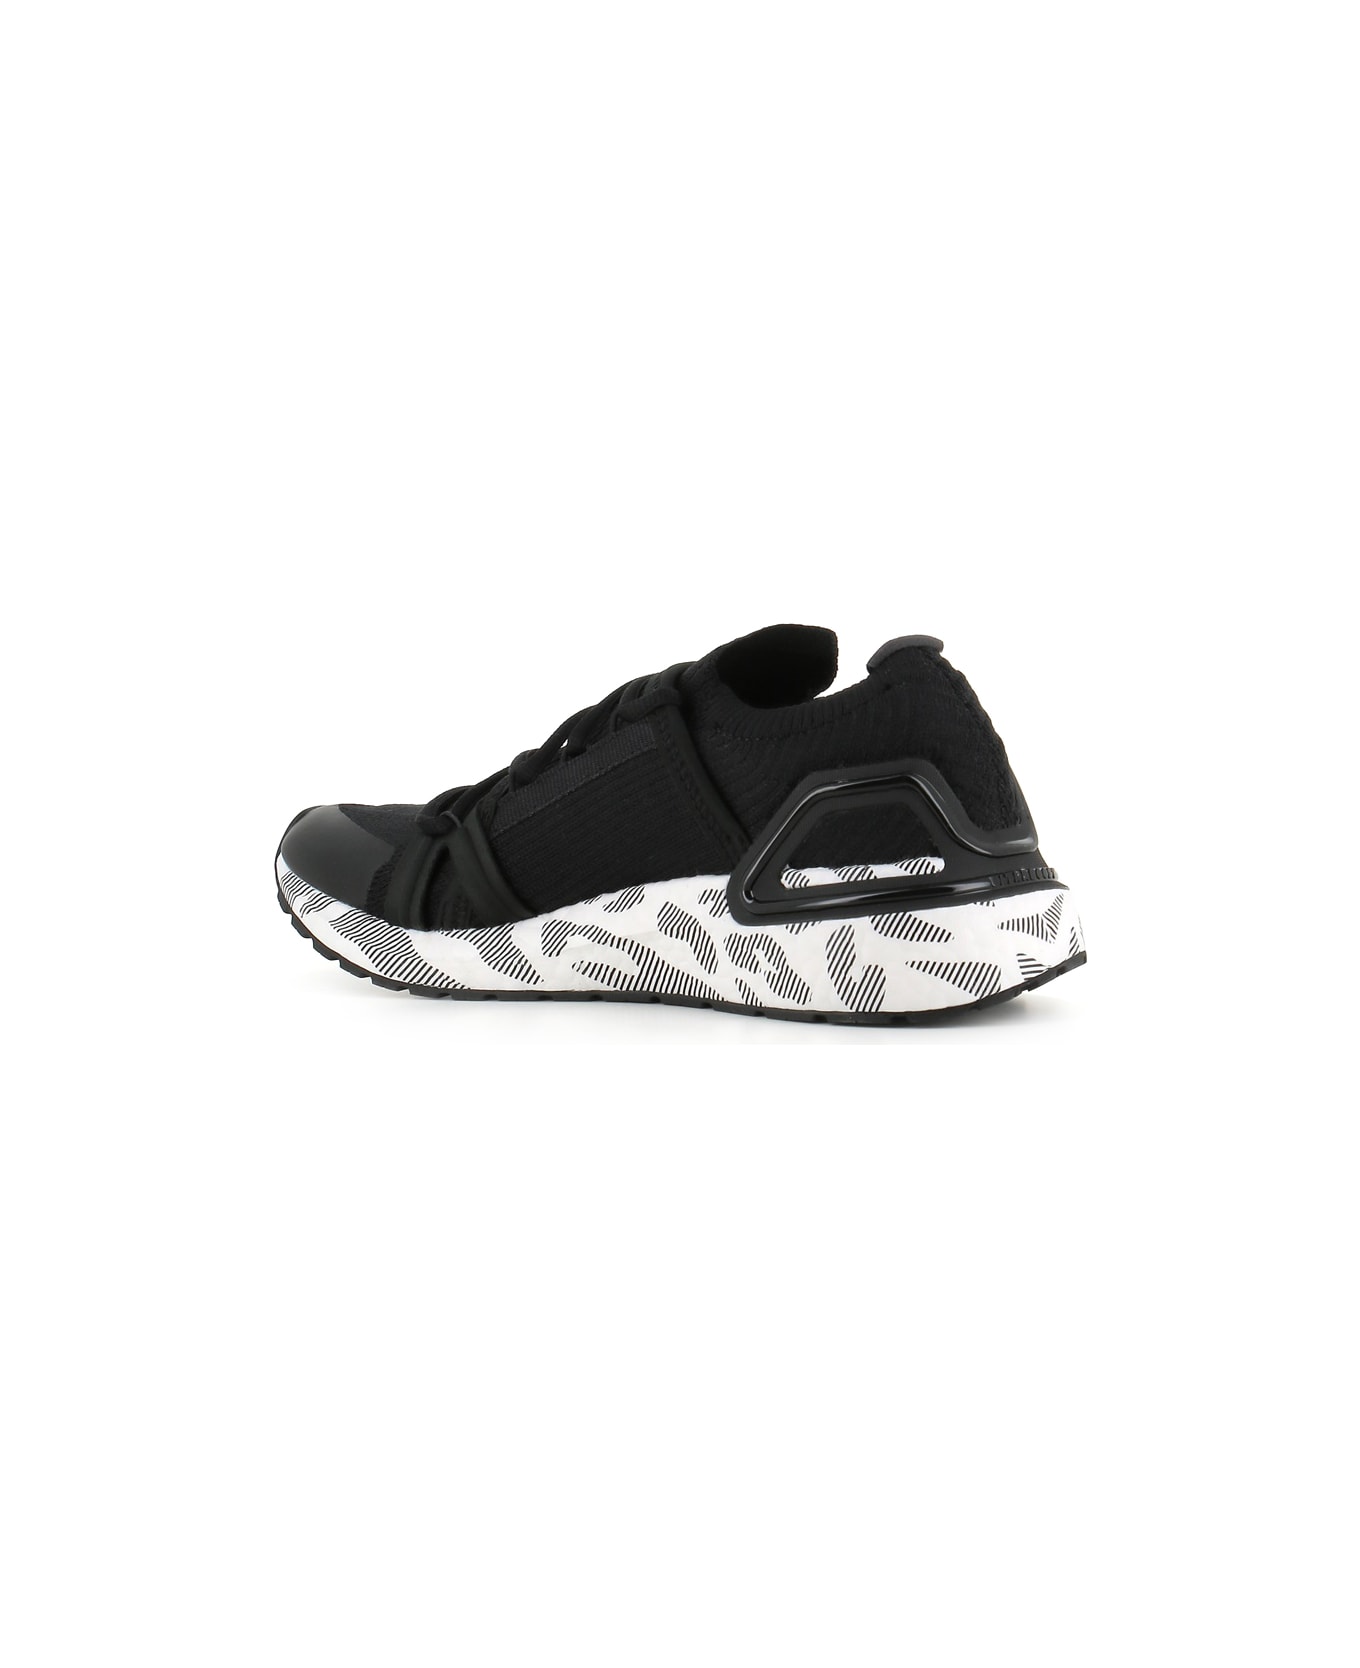 Adidas by Stella McCartney Ultraboost 20 Woman - Black/white スニーカー